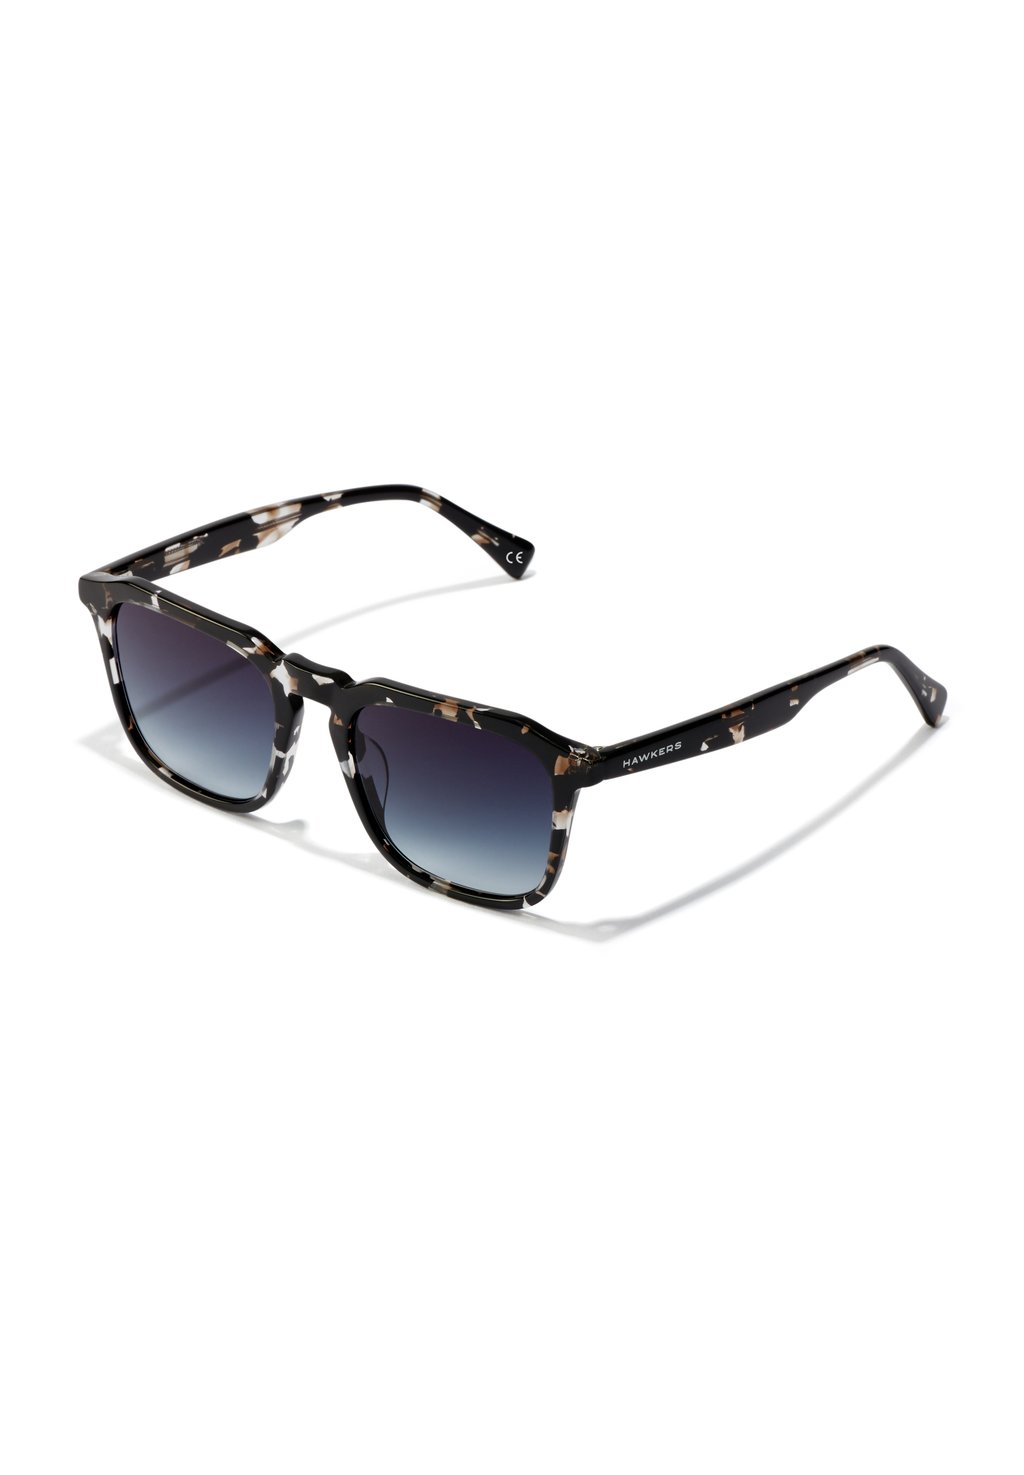 Солнцезащитные очки ETERNITY Hawkers, цвет black